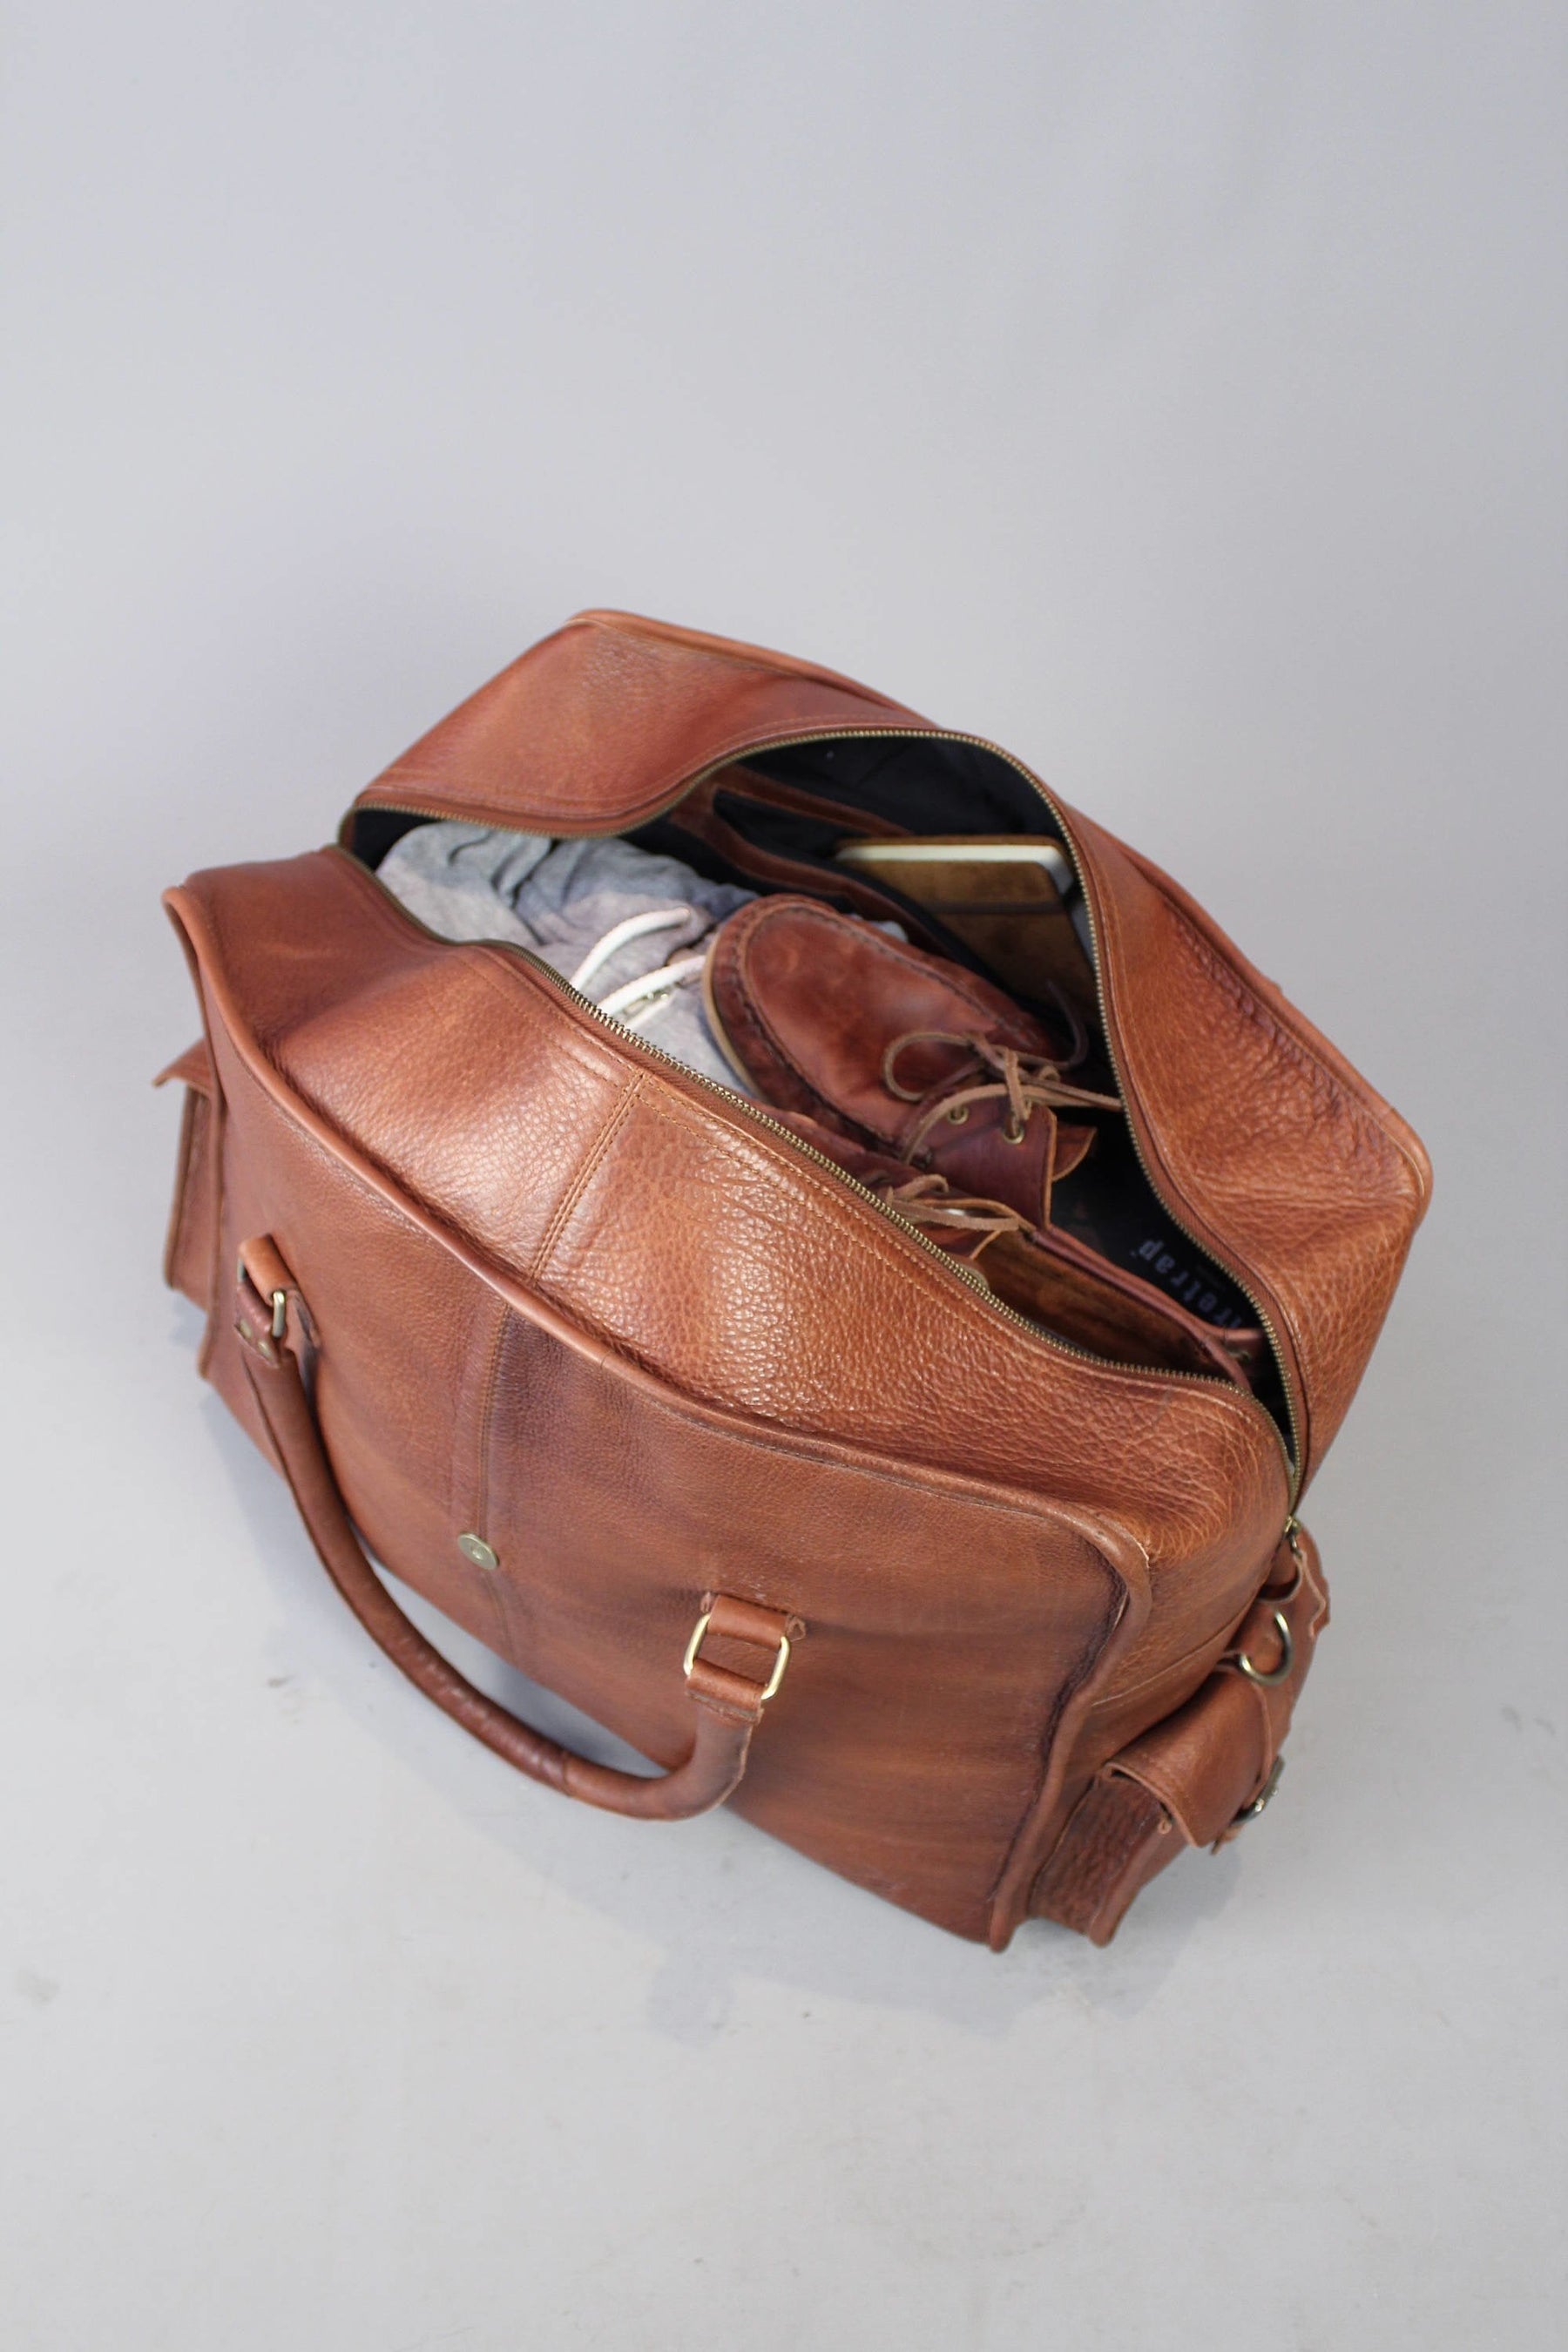 33rd Degree Scottish Rite Travel Bag - Wings Down Genuine Brown Leather - Bricks Masons